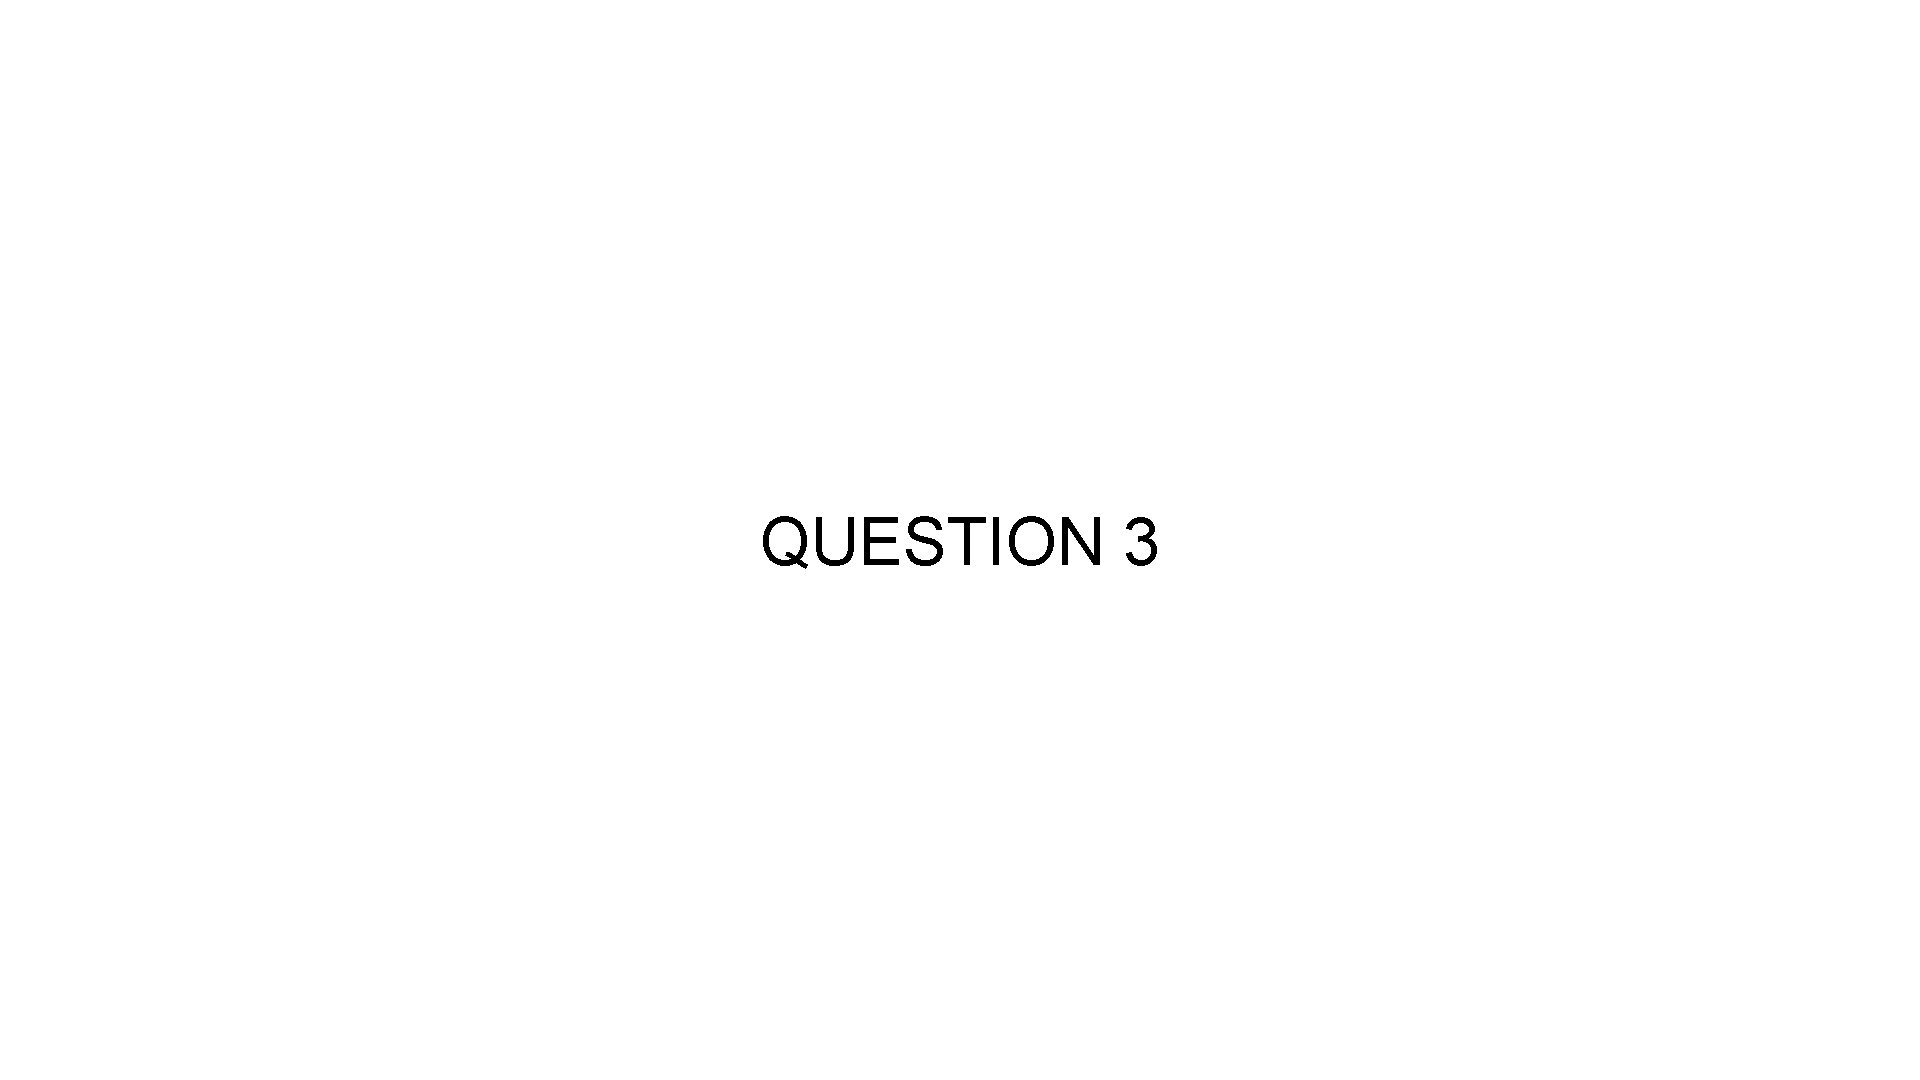 QUESTION 3 